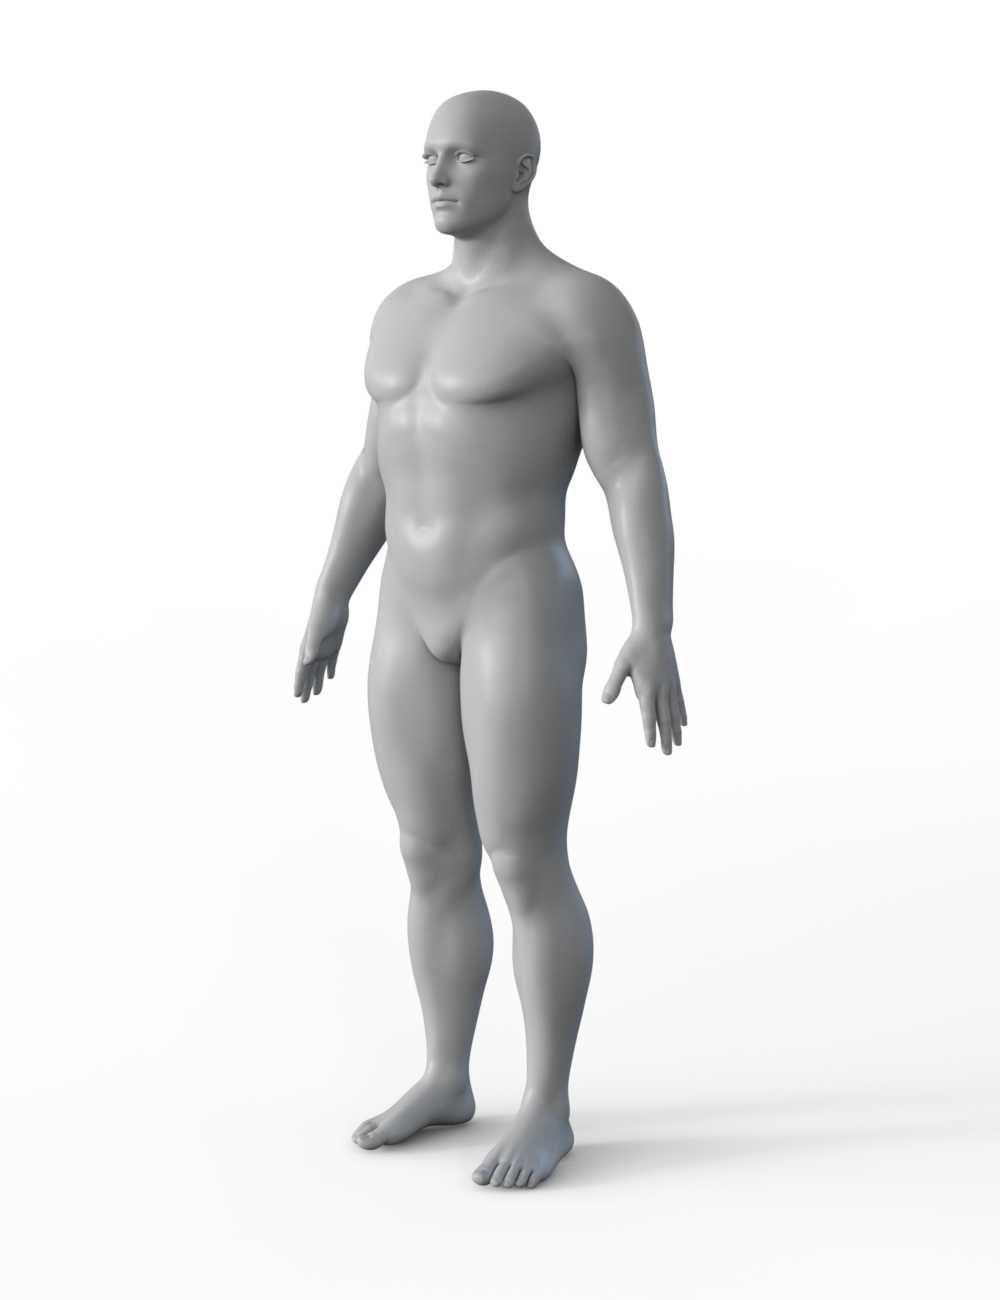 FBX- Lee Slacker Outfit by: Paleo, 3D Models by Daz 3D